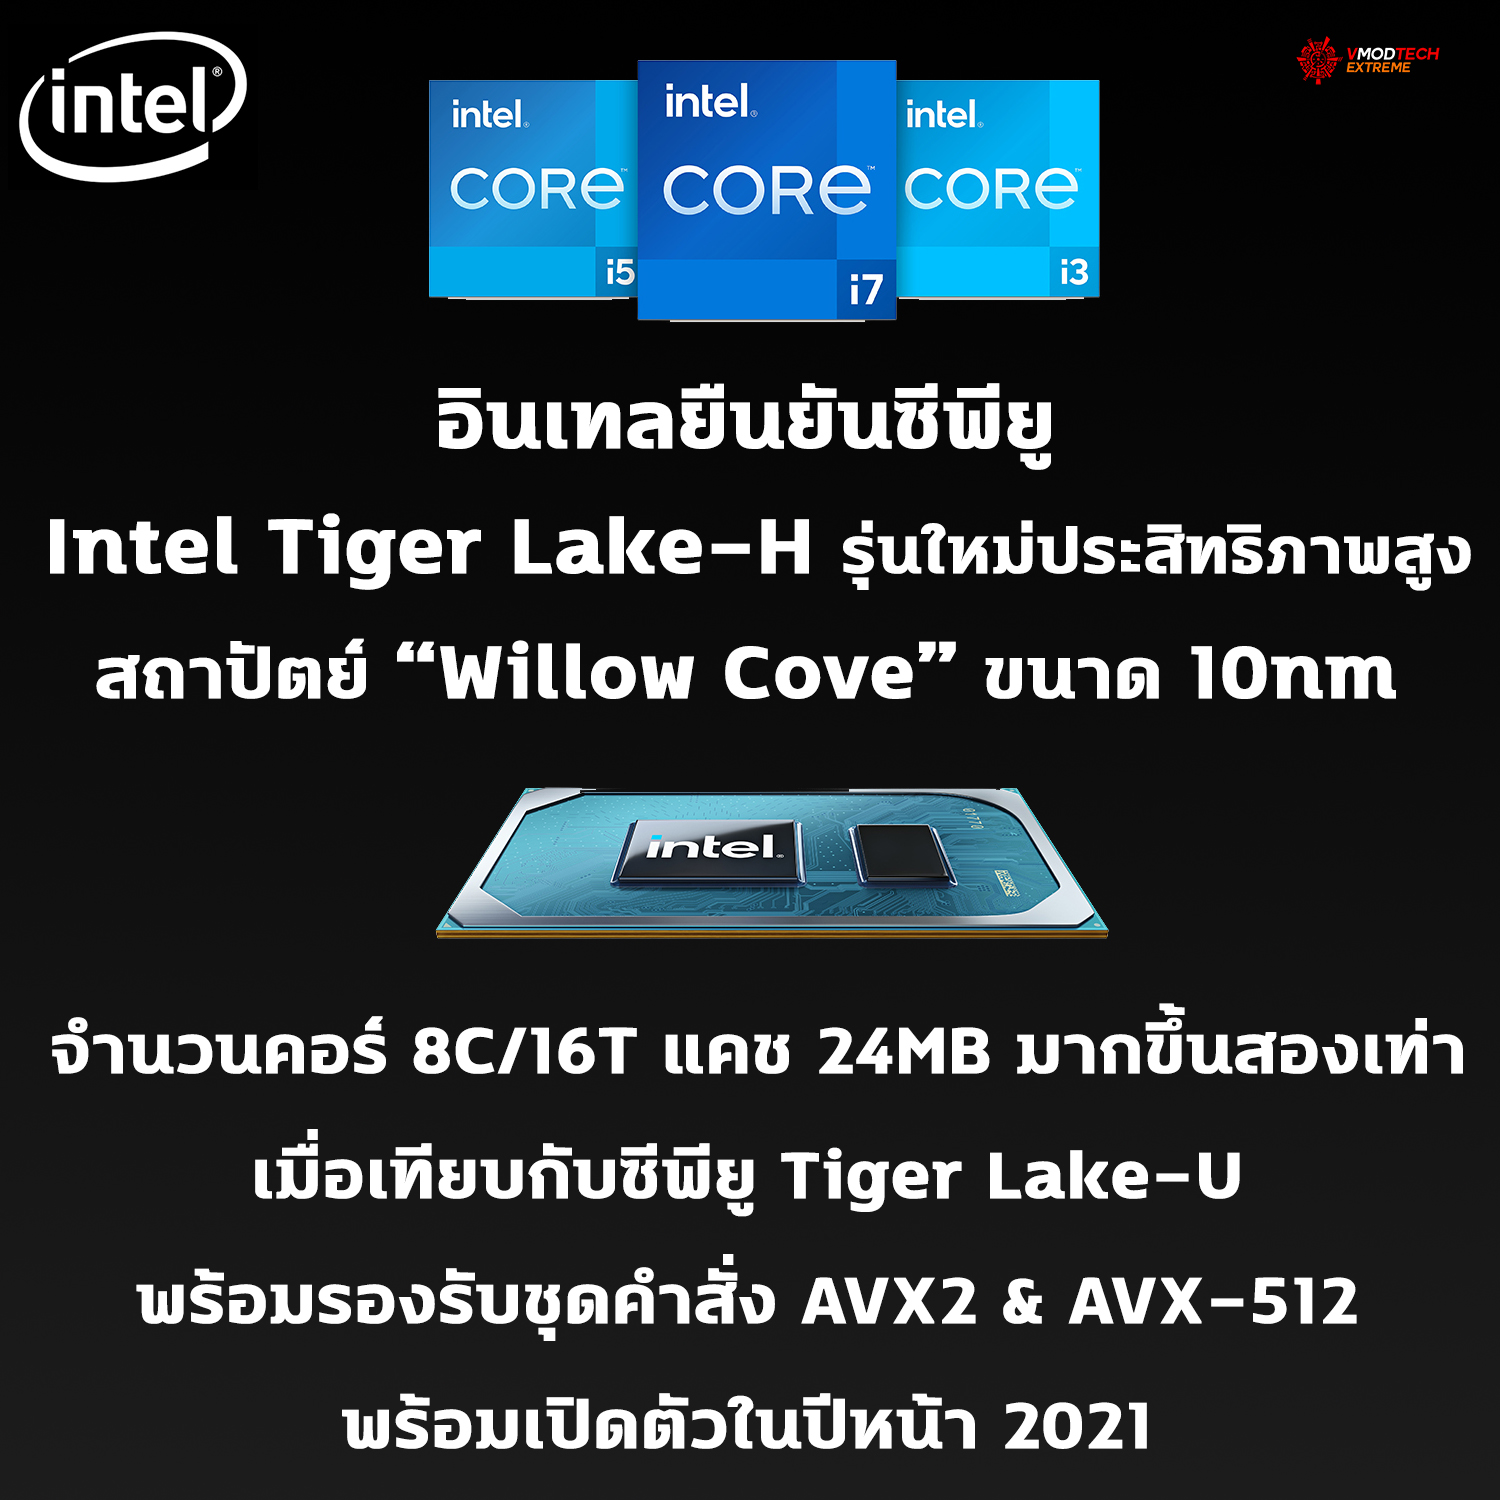 intel tiger lake h อินเทลยืนยันซีพียู Intel Tiger Lake H รุ่นใหม่ประสิทธิภาพสูงขนาดสถาปัตย์ 10nm จะเปิดตัวในปีหน้า 2021 